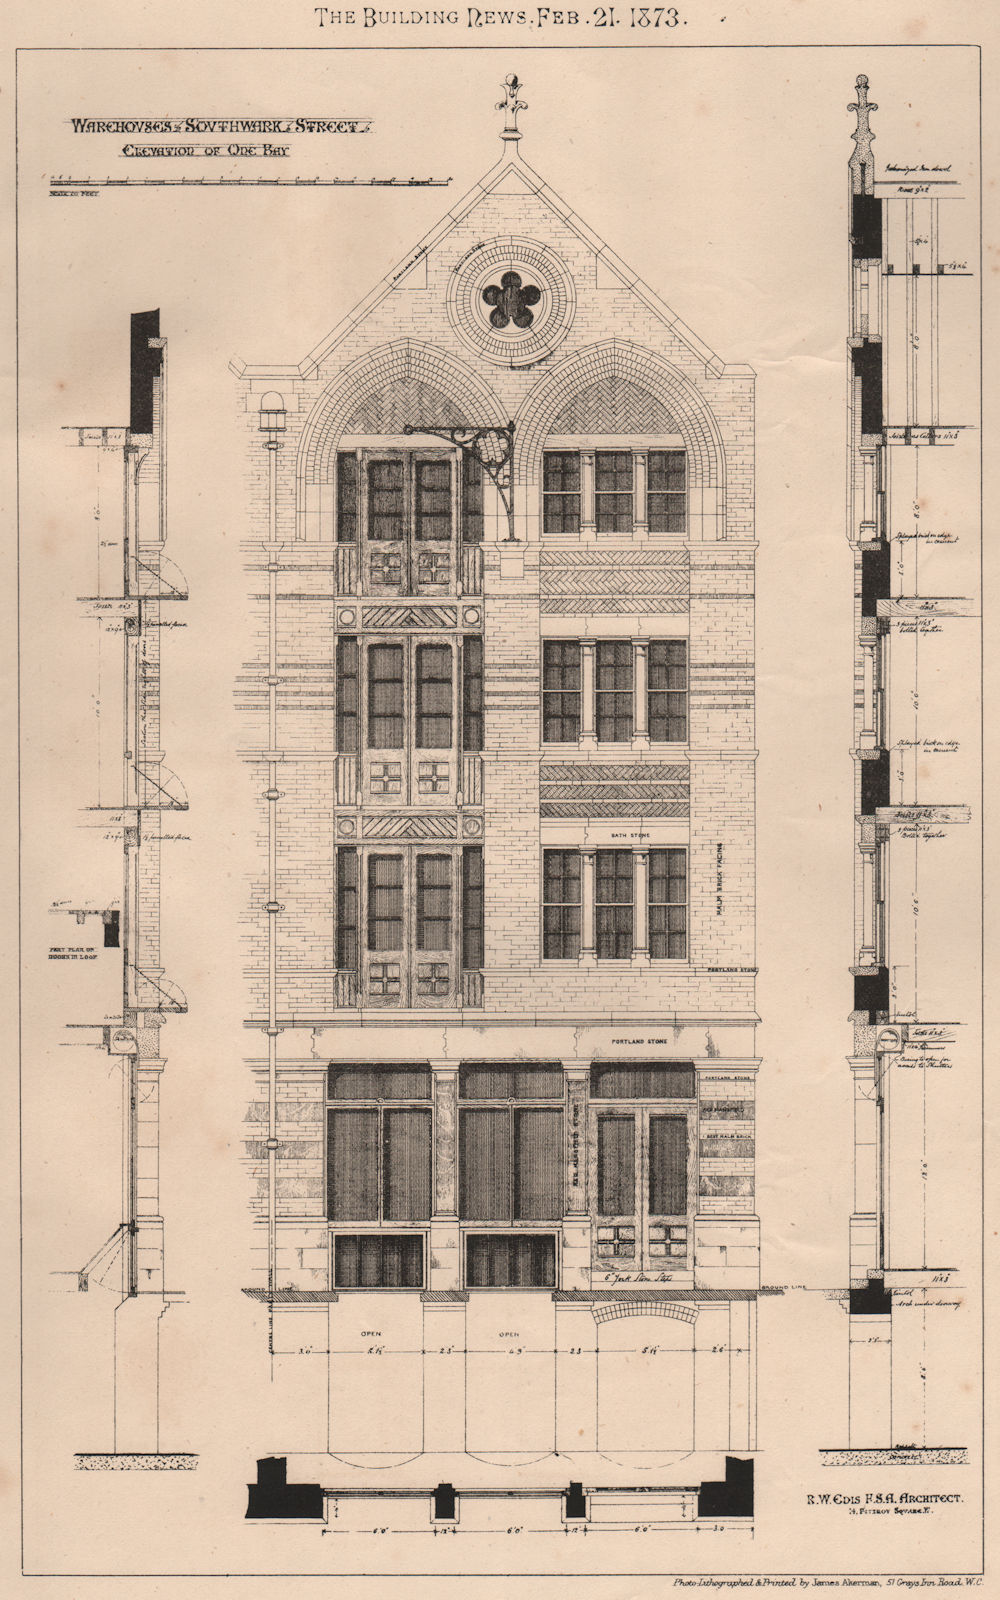 Warehouses, Southwark Street. Elevation of one bay; RW Edis Architect 1873